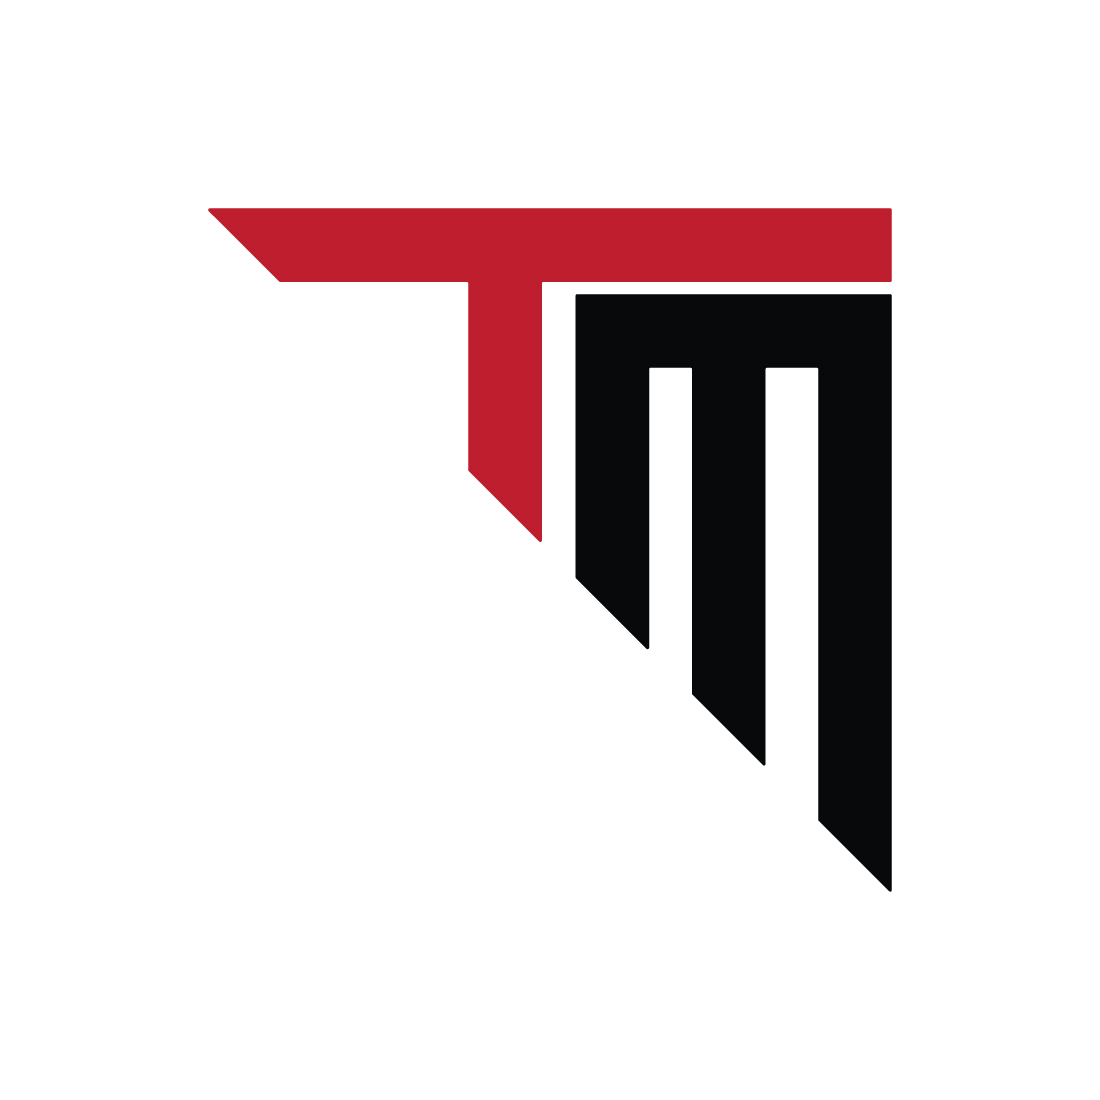 Initials TM logo design TM letters logo design vector template images design MT logo black and red color best company identity preview image.